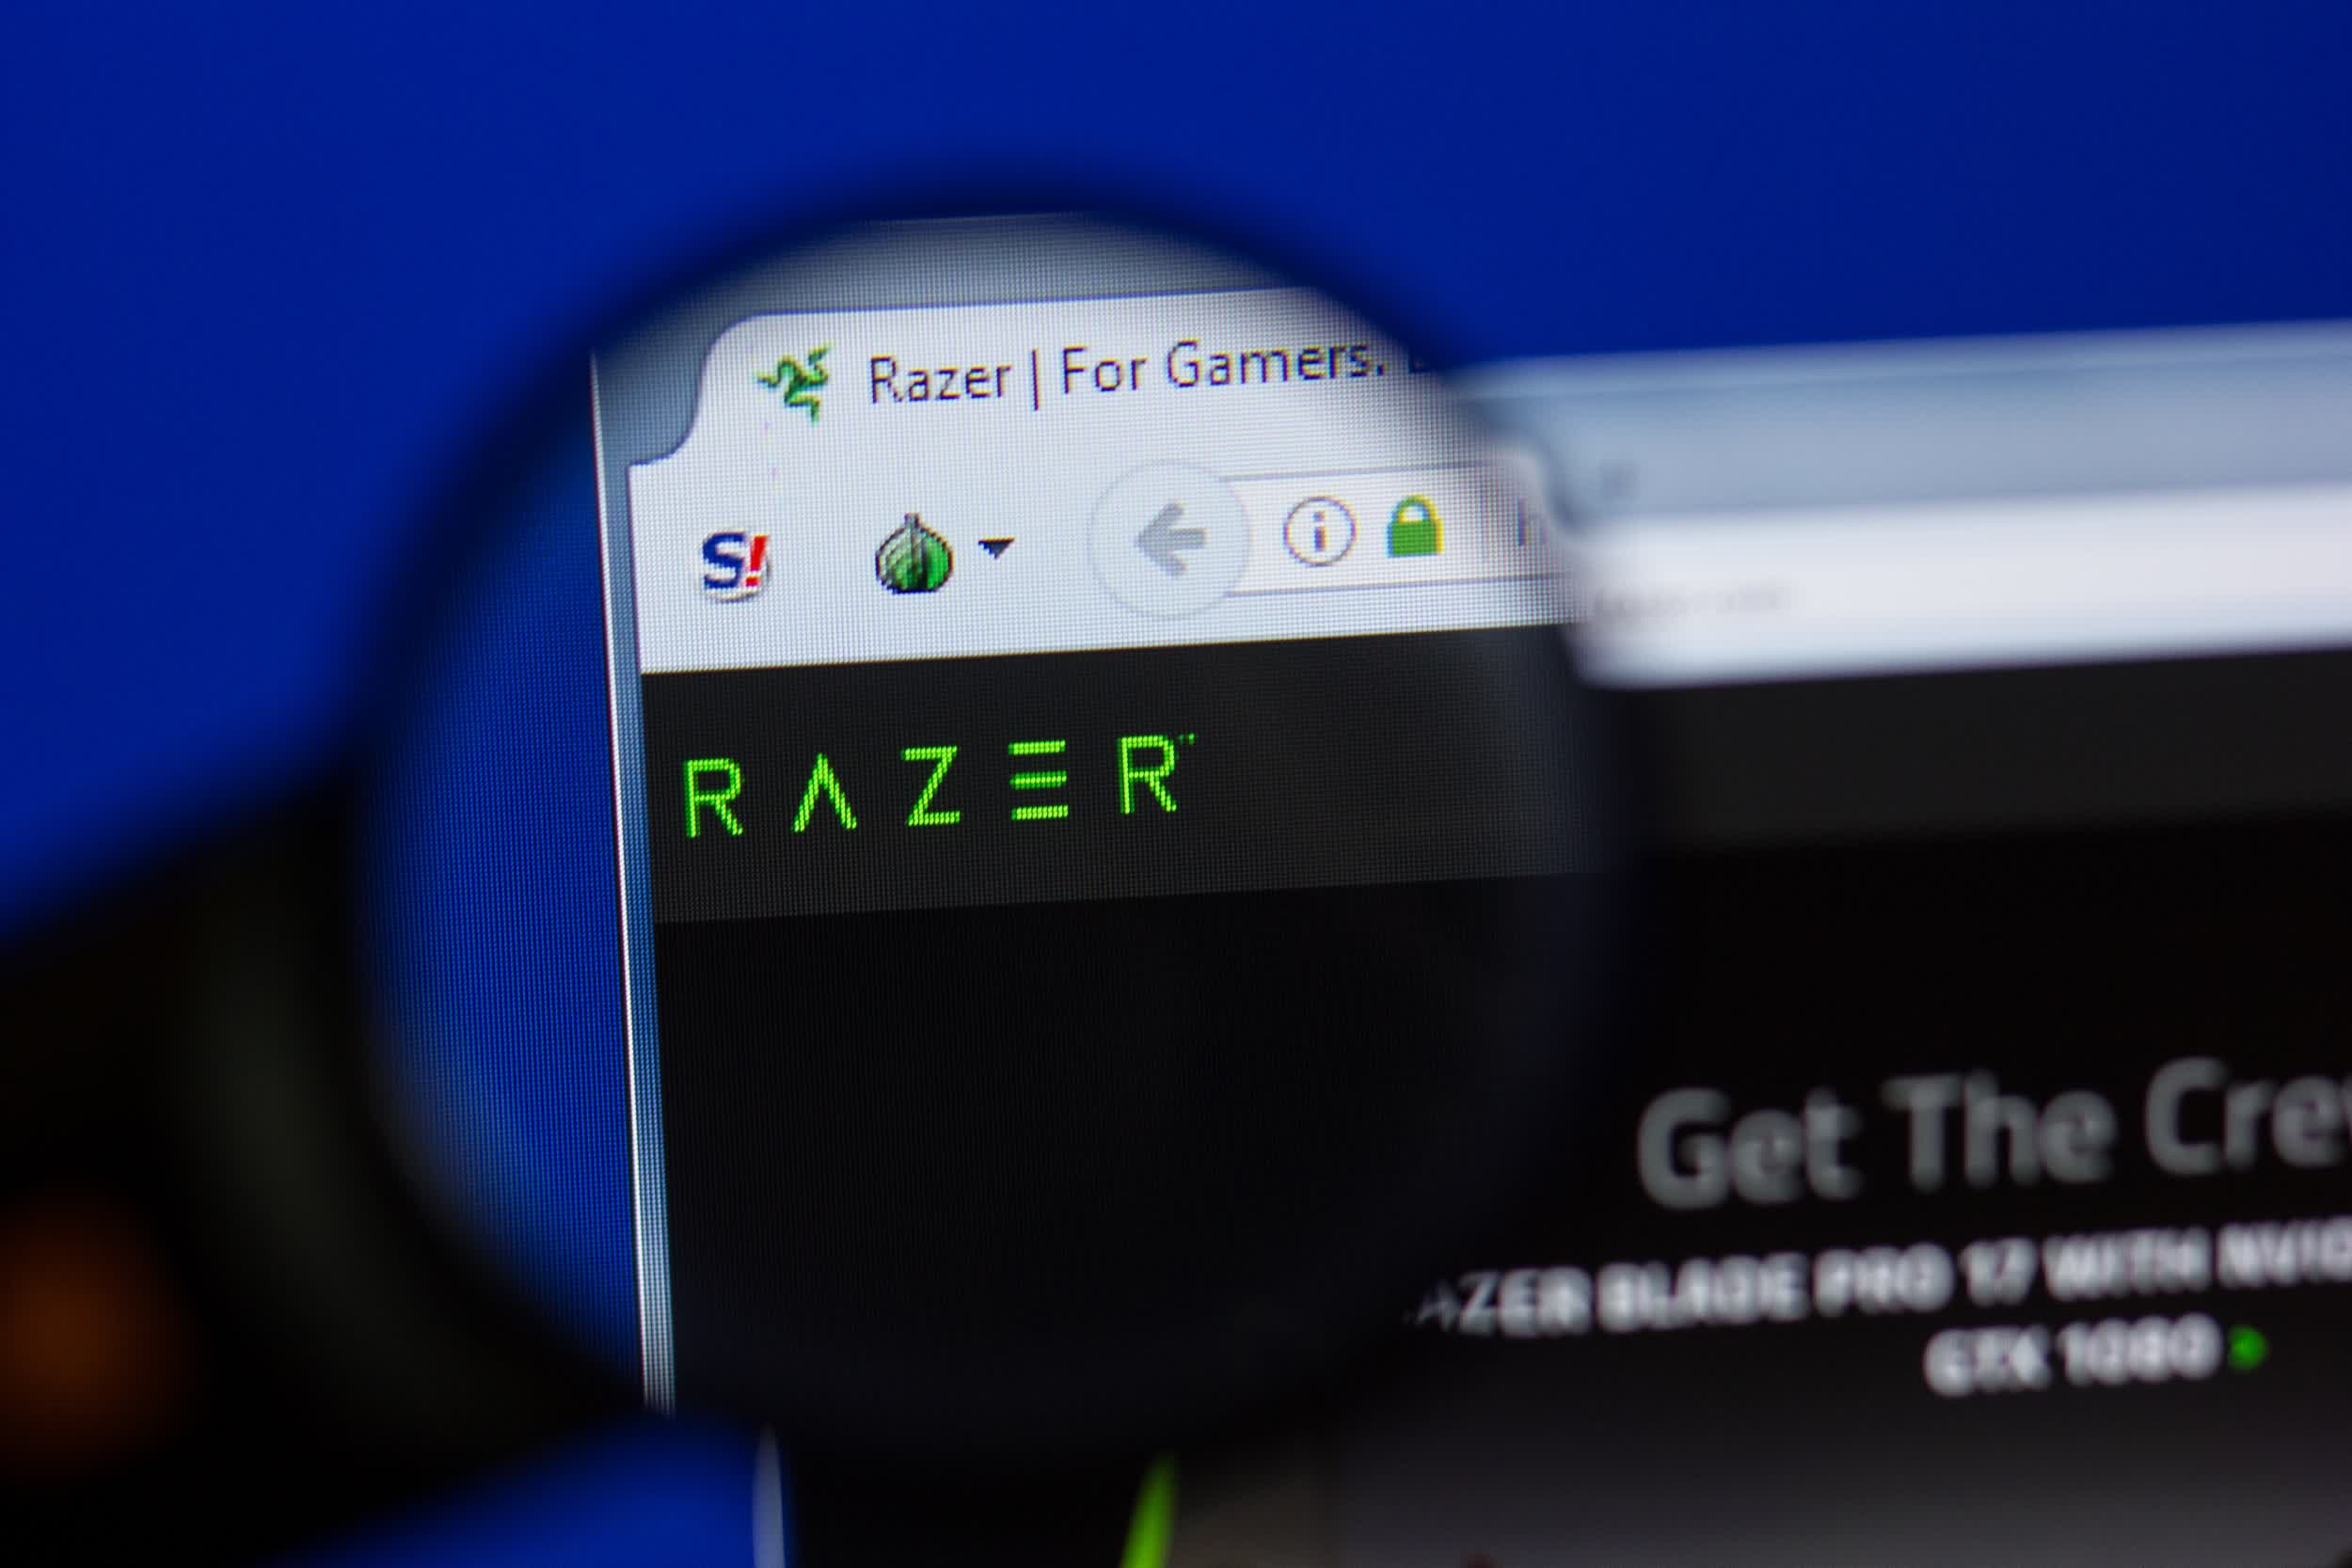 Razer accidentally exposed data of 100,000+ customers